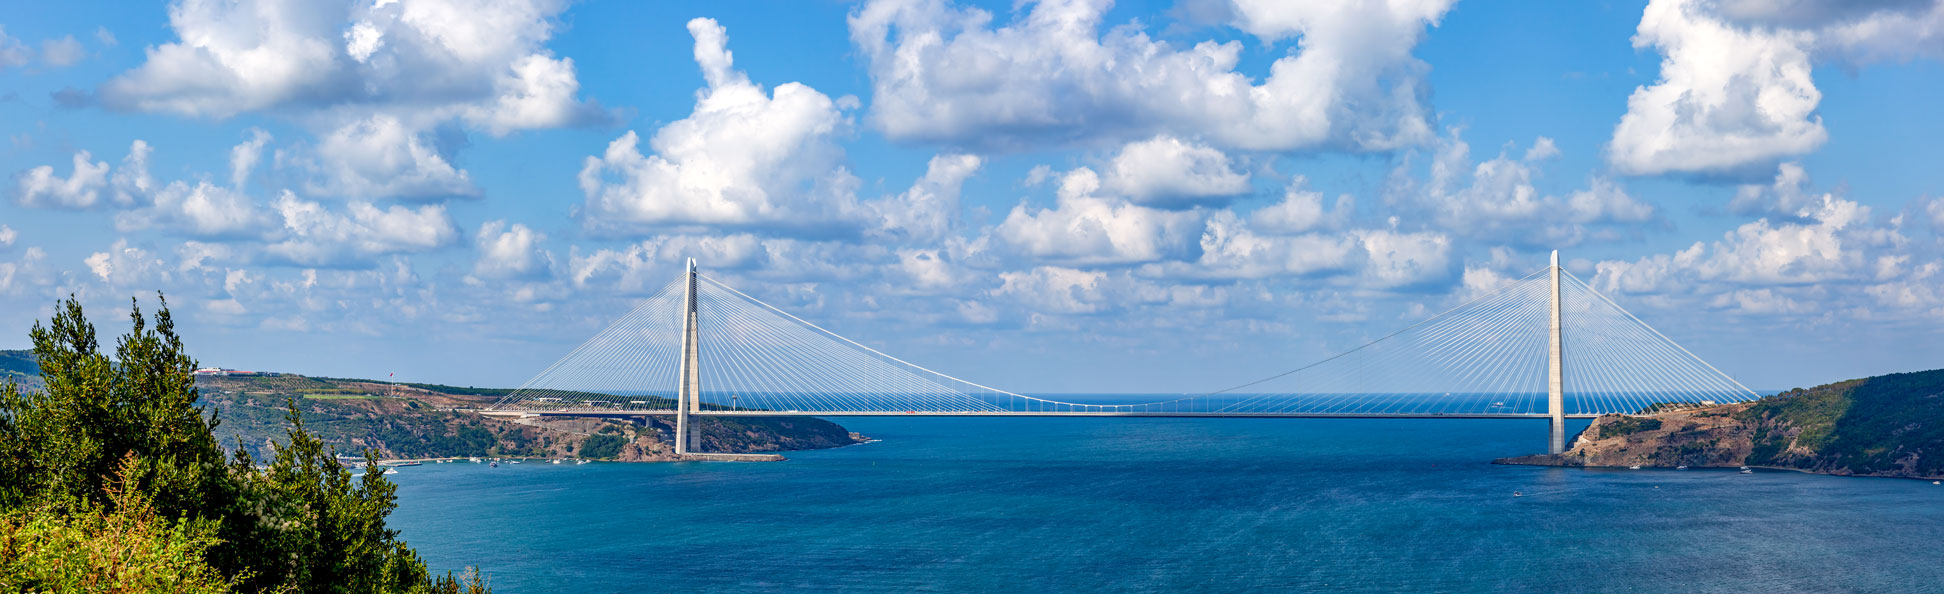 Yavuz Sultan Selim Bridge - The Third Bosphorus Bridge over the Bosphorus Strait